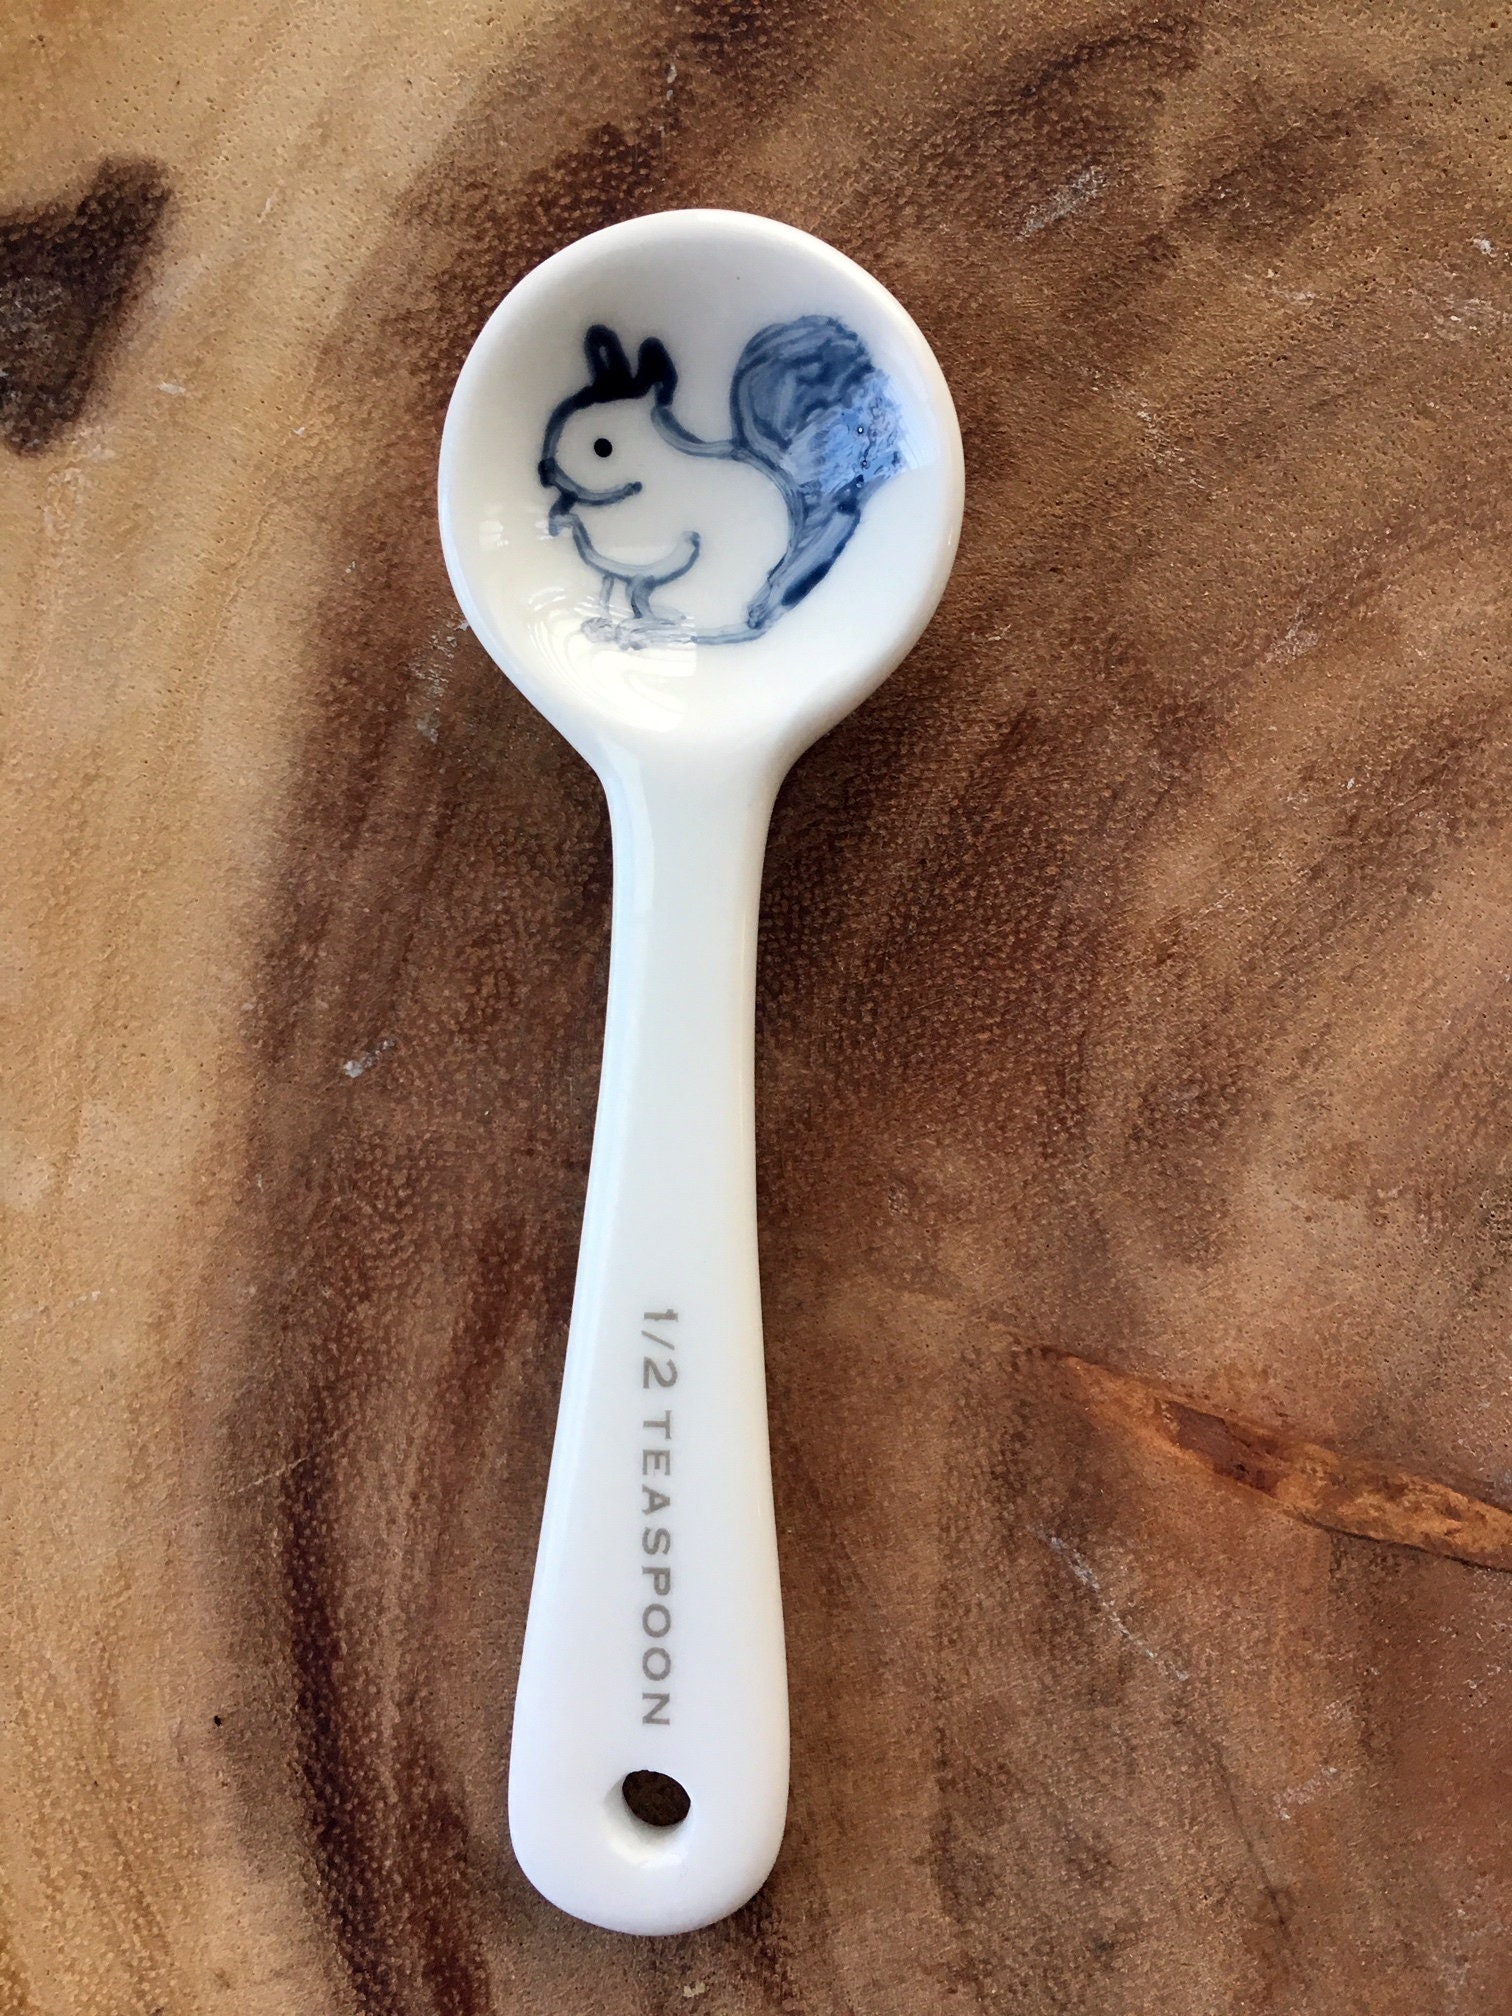 Dachshund Novelty Ceramic Measuring Spoons Set of 4 NWT